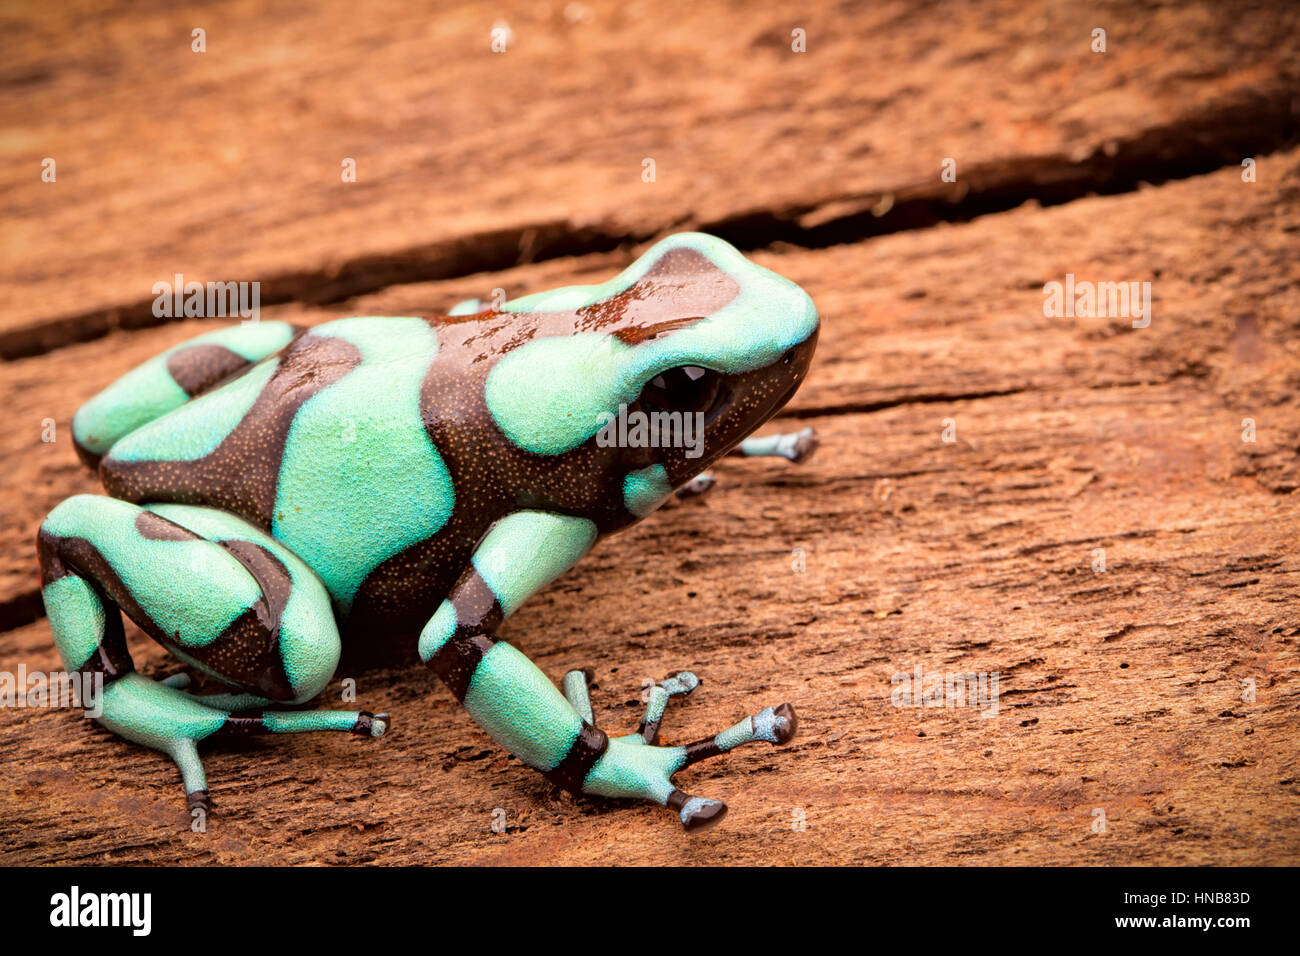 Poison dart frog, Dendrobates auratus Pena Blanca. Poisonous rain forest animal from Panama. Stock Photo